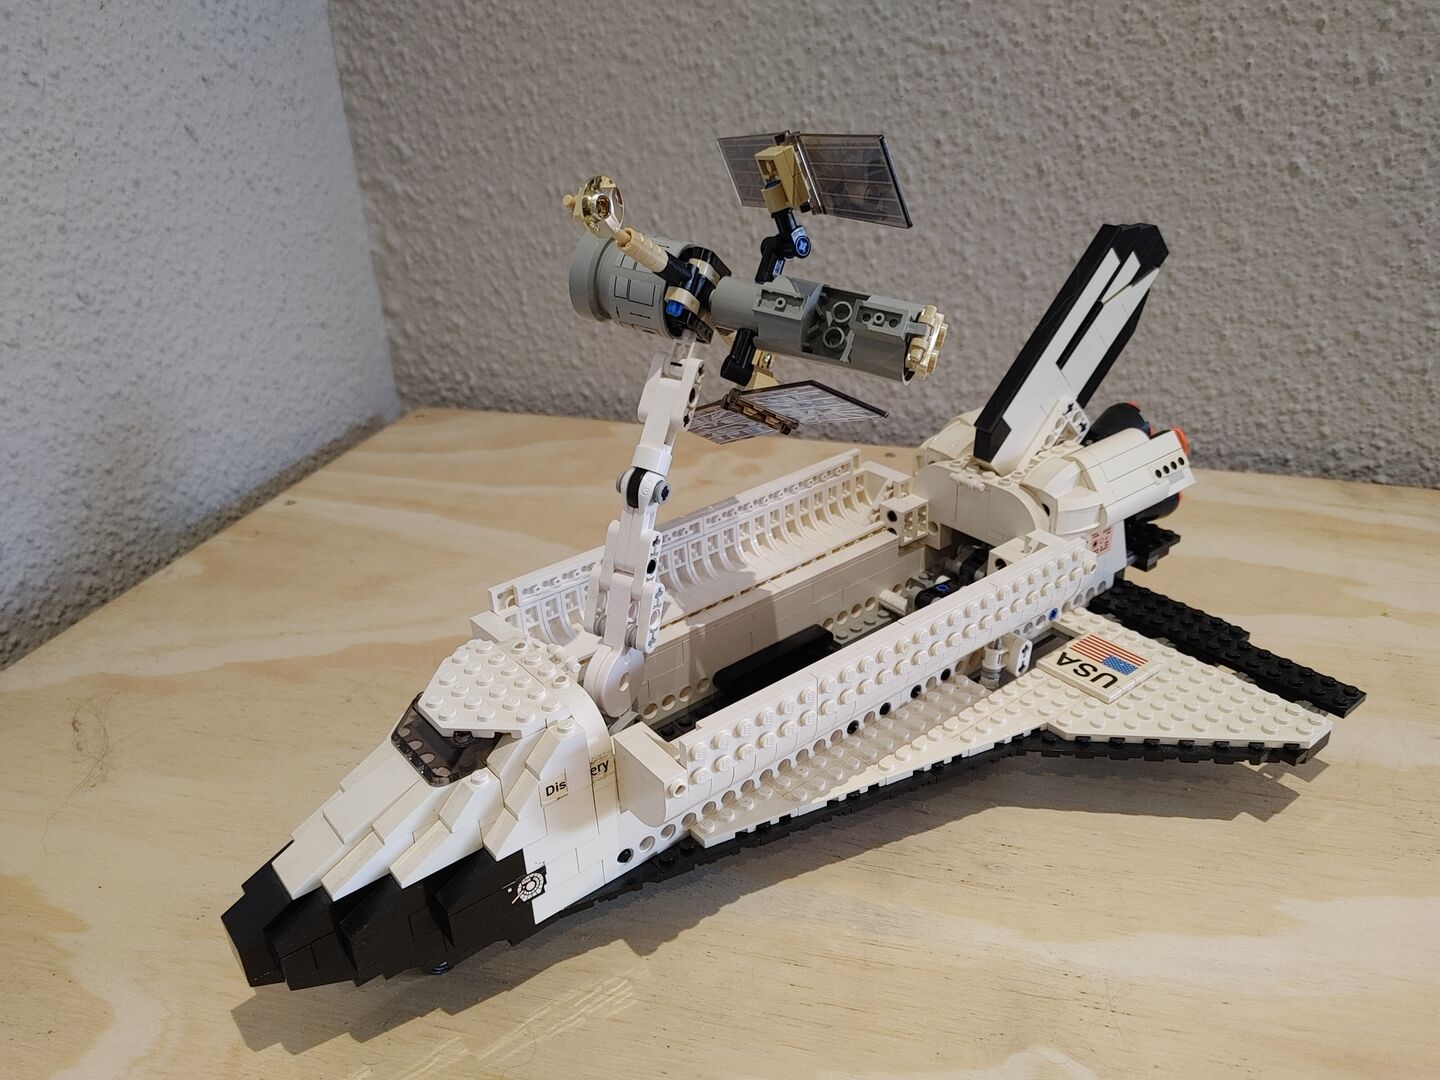 lego shuttle models